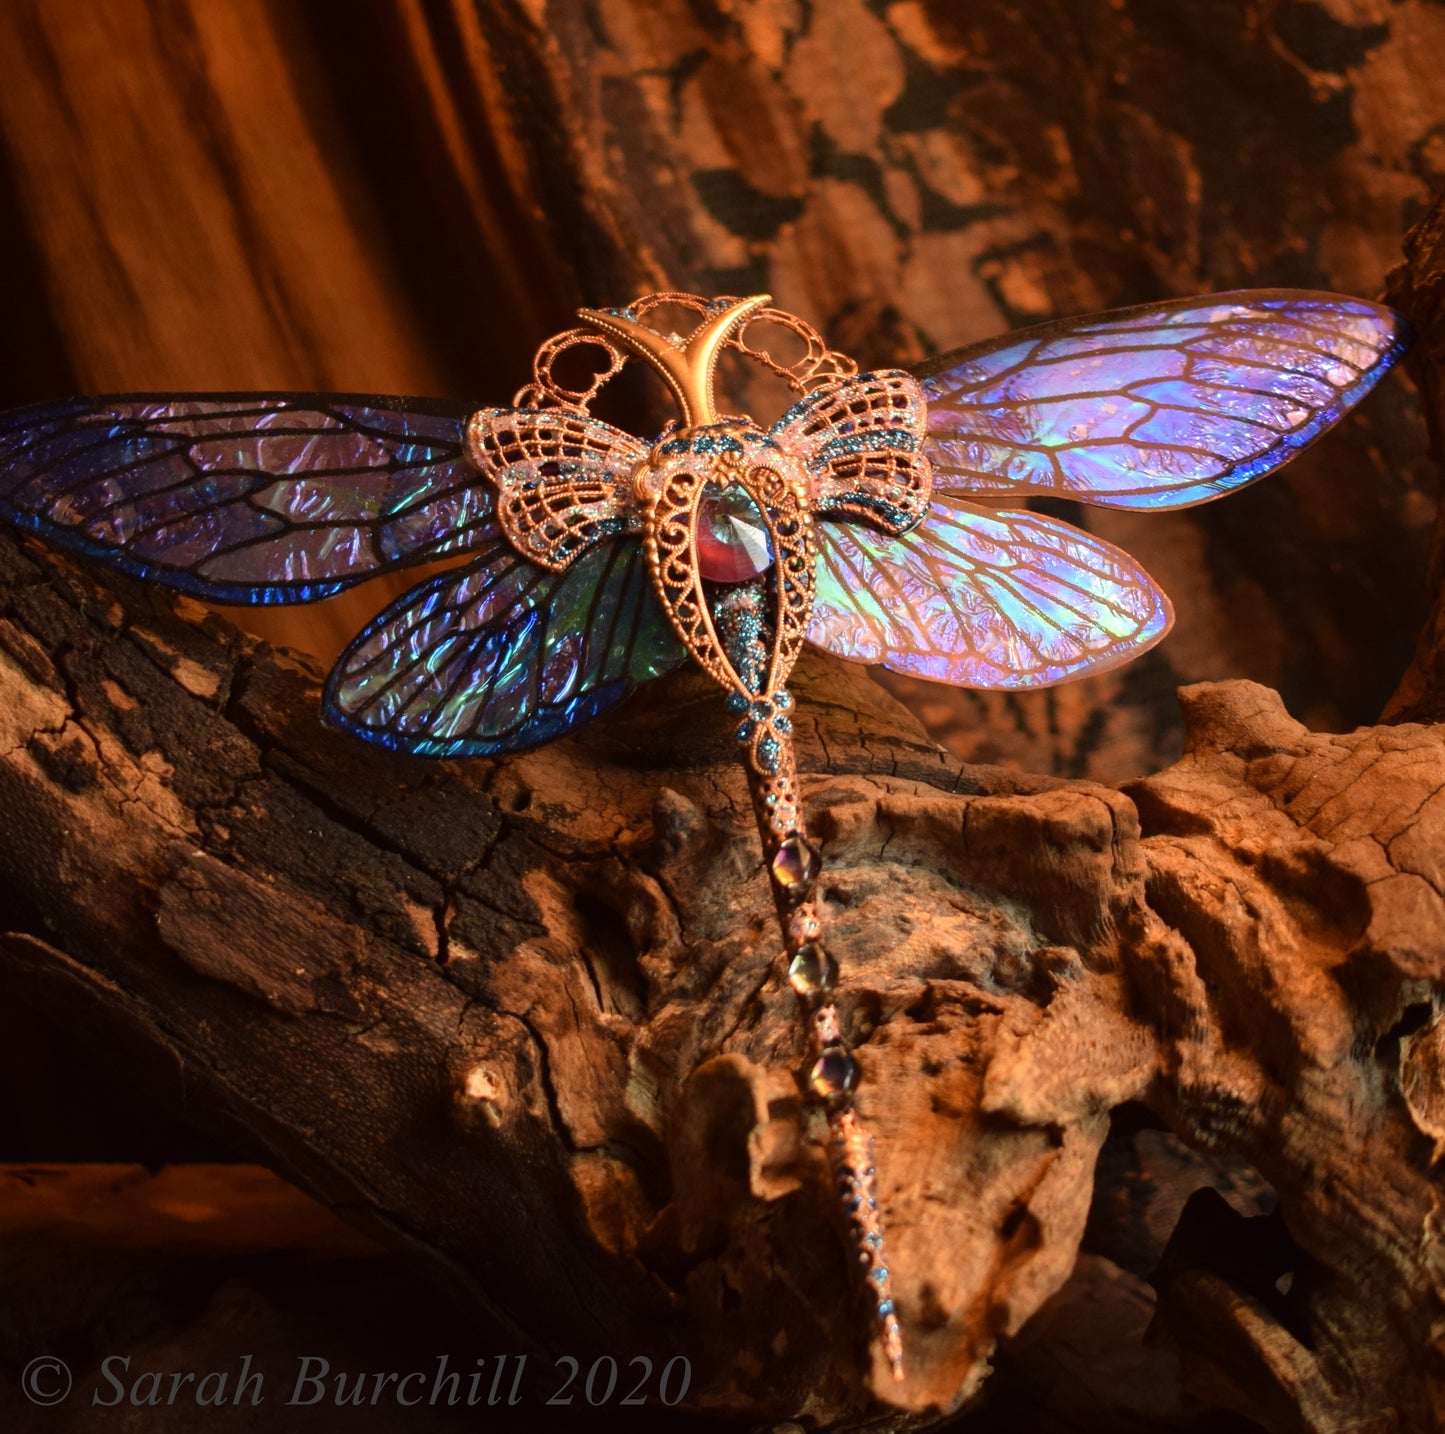 Elunarian Dragonfly - Iolite